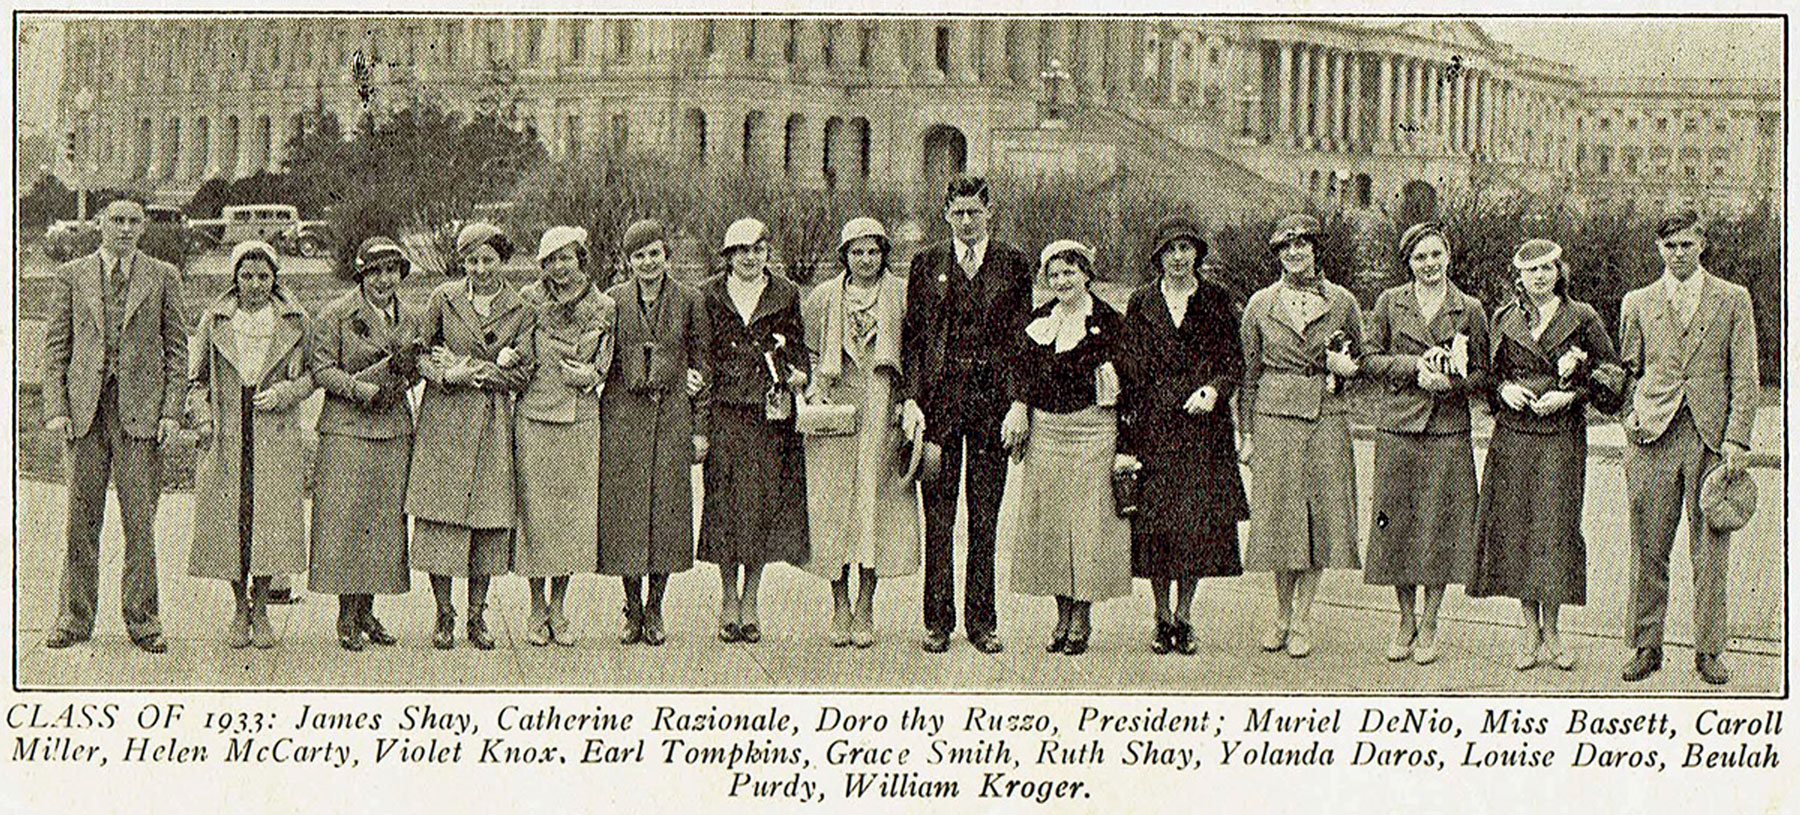 Purdys central High - Class of 1933 - Washington DC trip